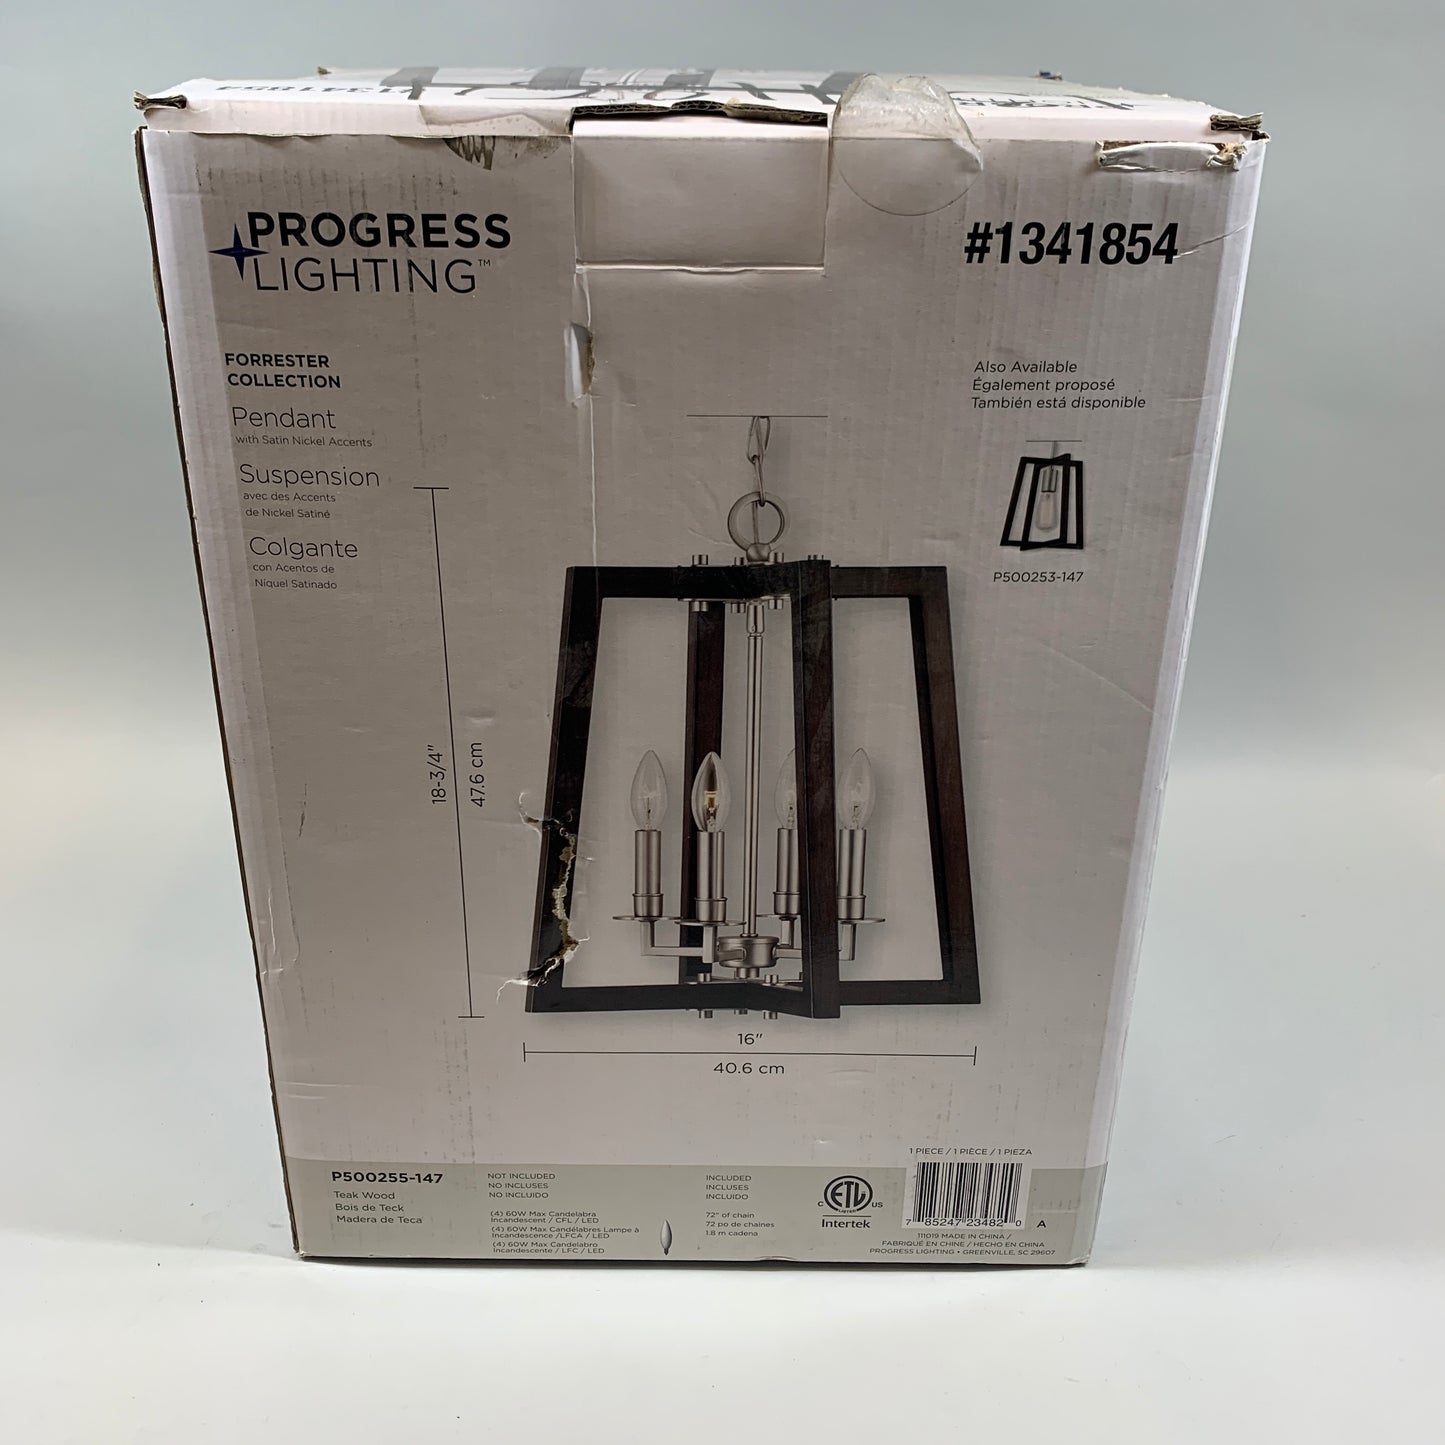 New Progress Lighting Forrester Lantern Pendant Light P500255-147 Teak Wood & Satin Nickel 1341854